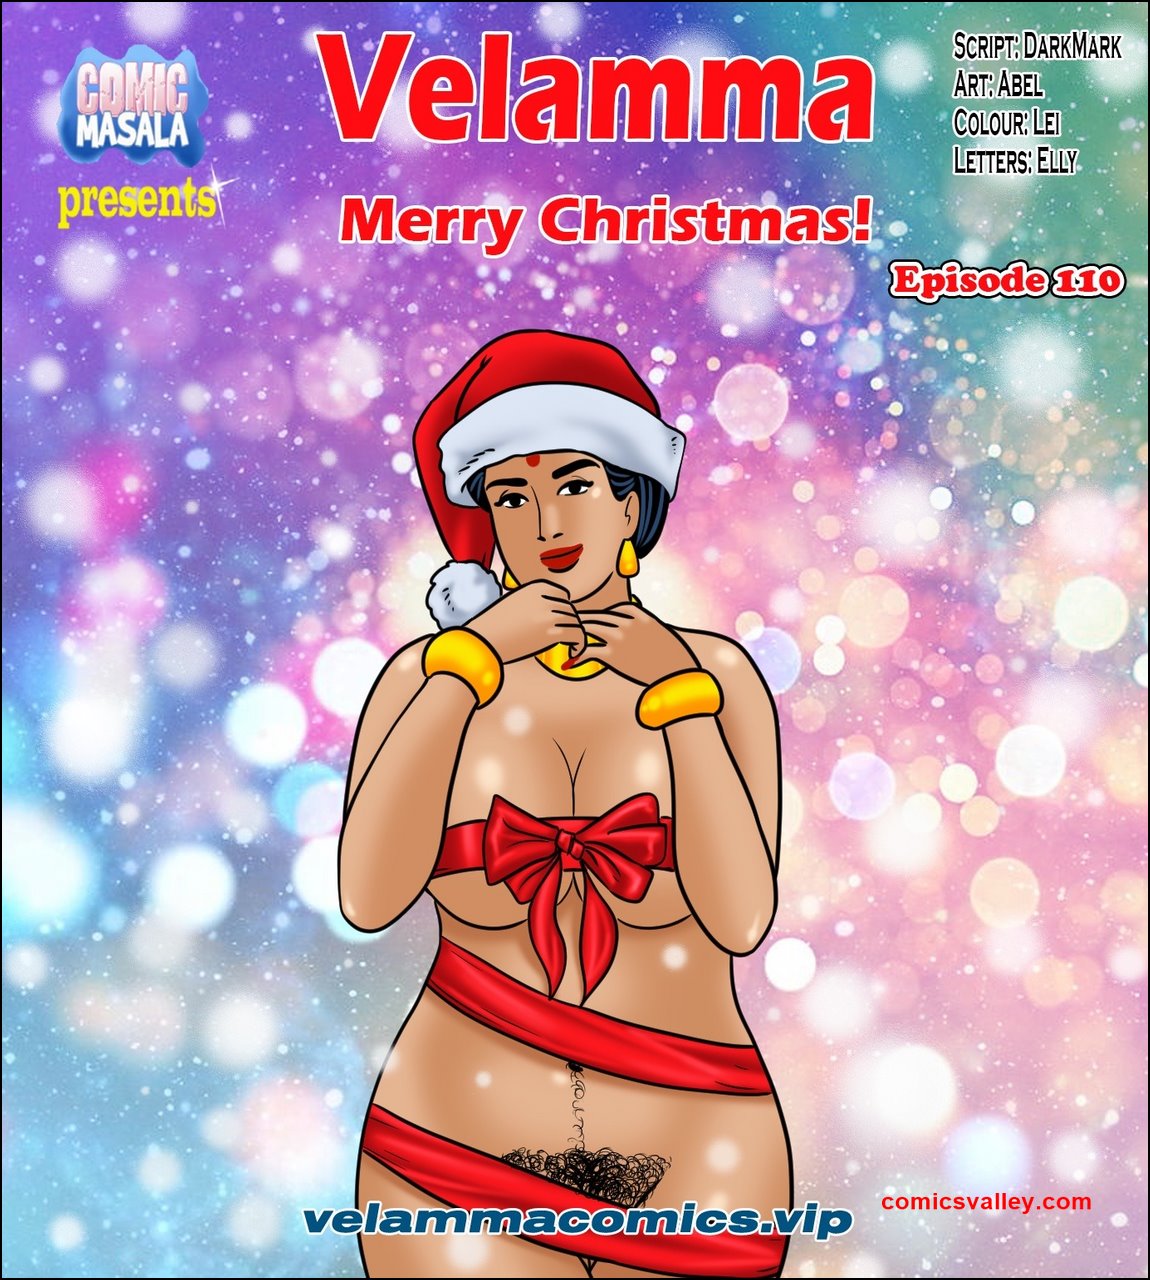 Velamma Episode 110 - Merry Christmas!